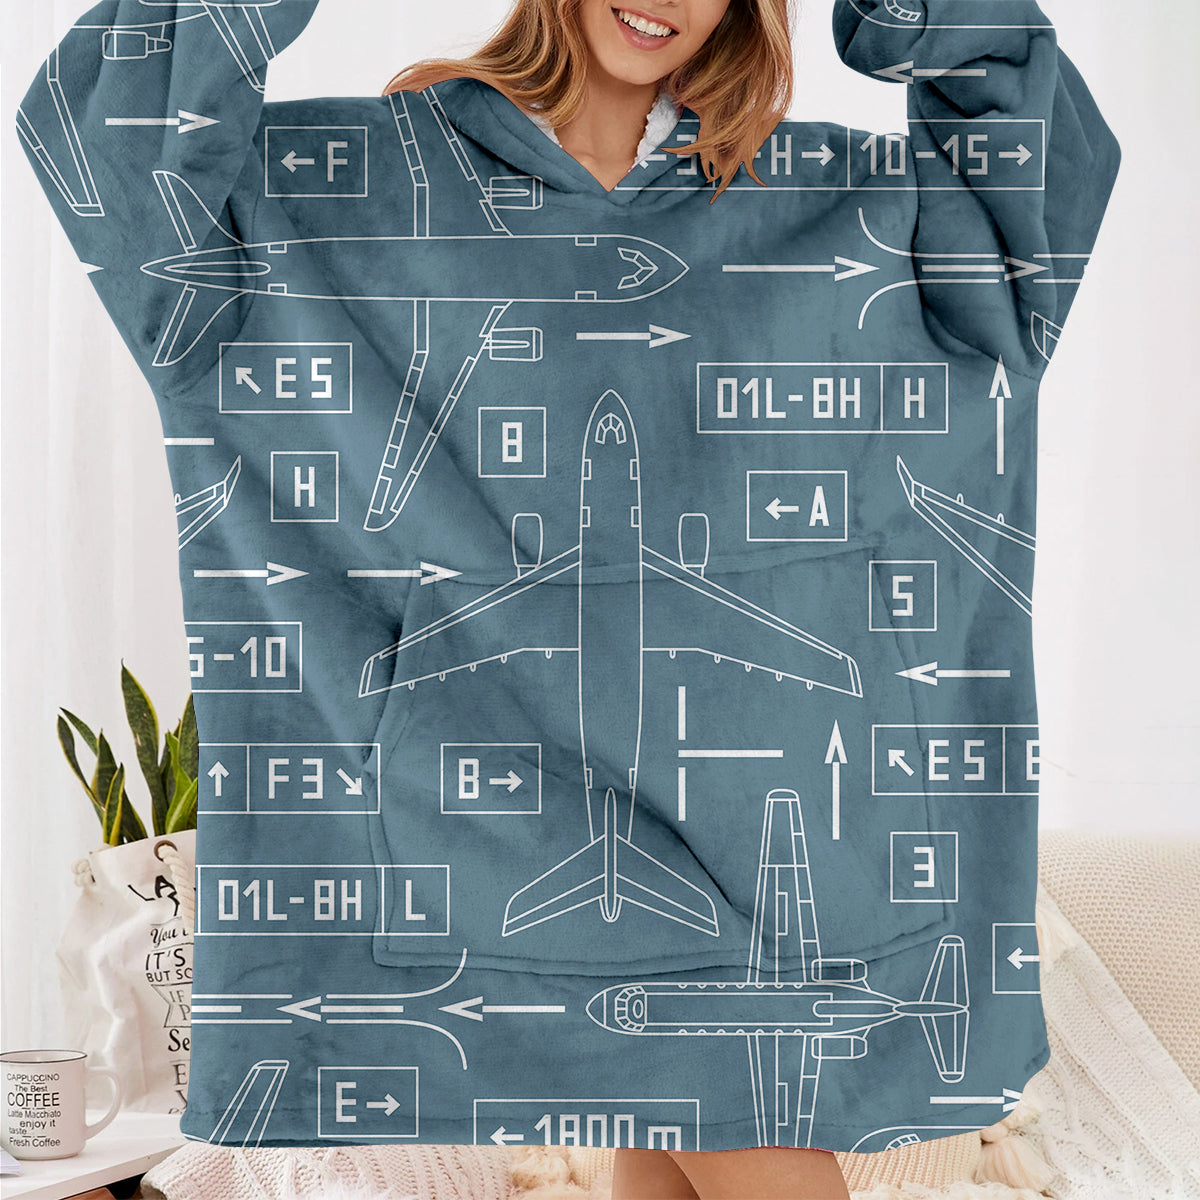 Jet Planes & Airport Signs Designed Blanket Hoodies